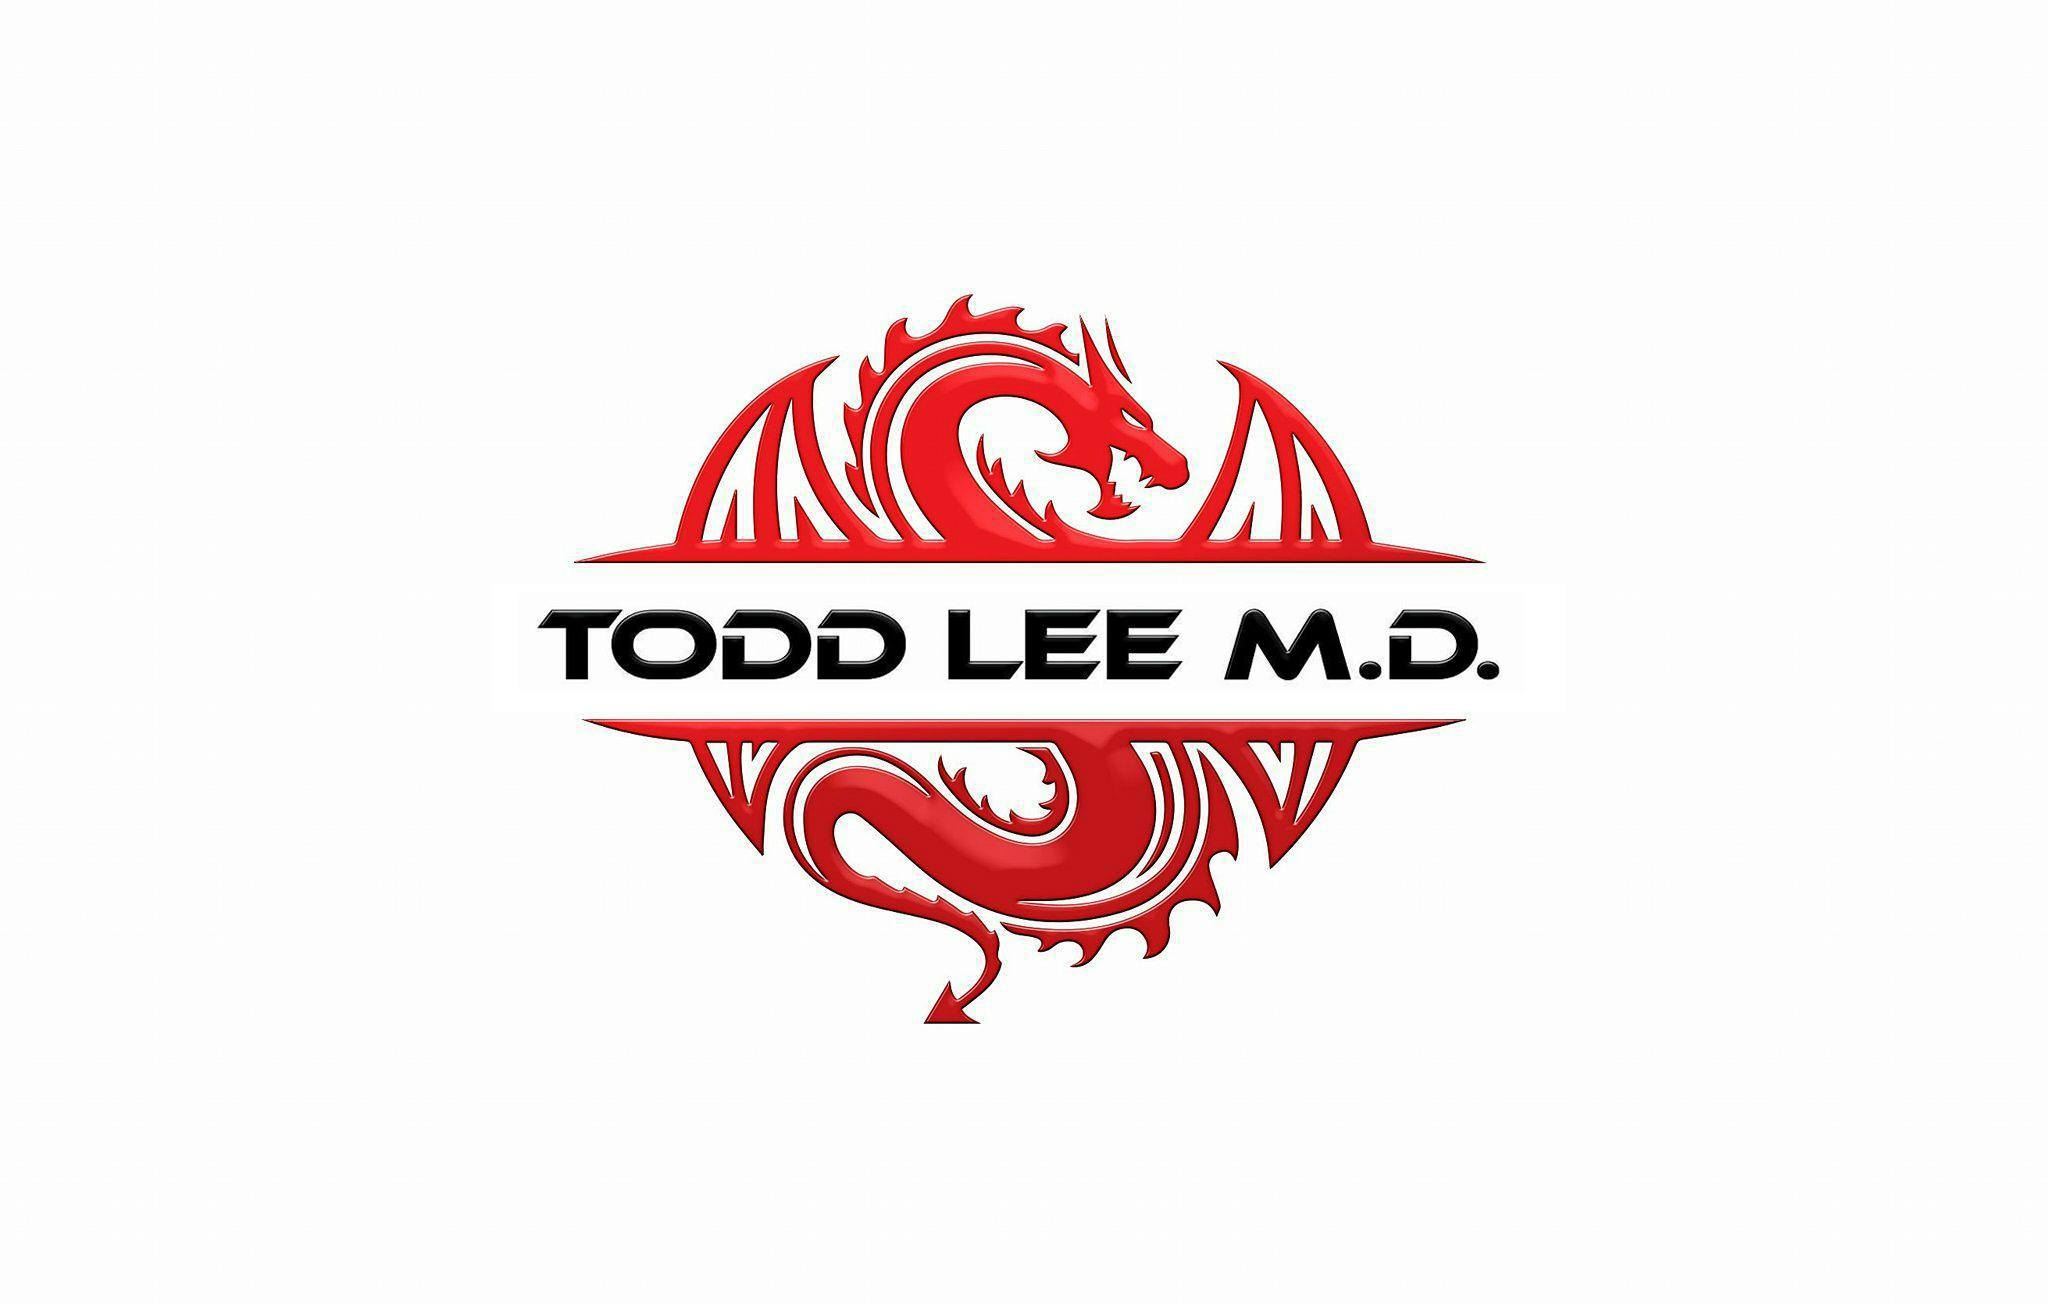 Todd Lee M.D.